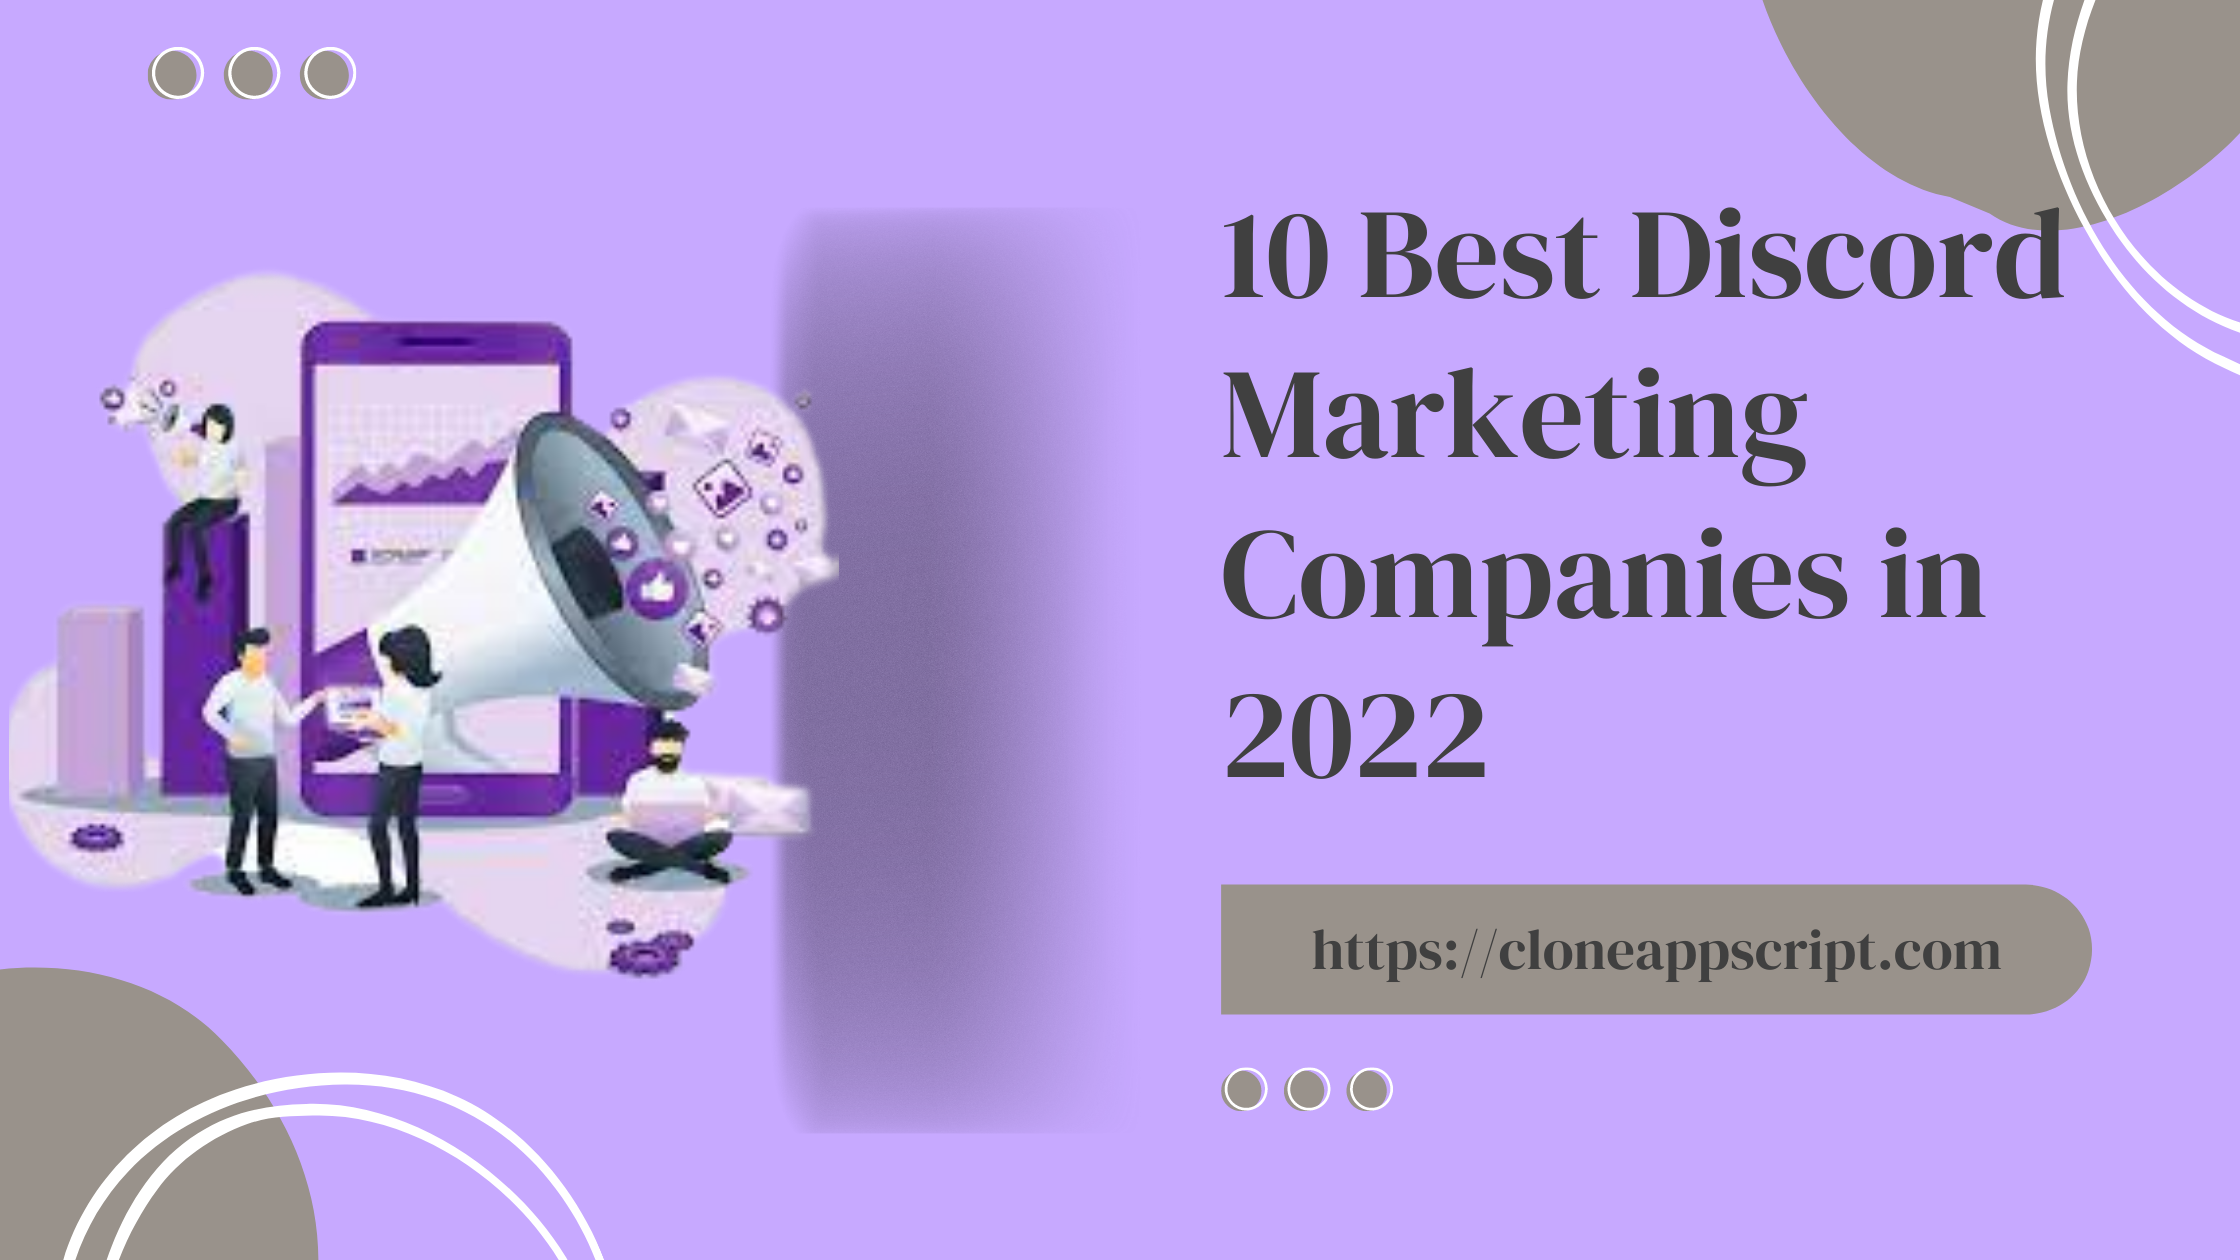 10 Best Discord Marketing Companies in 2022